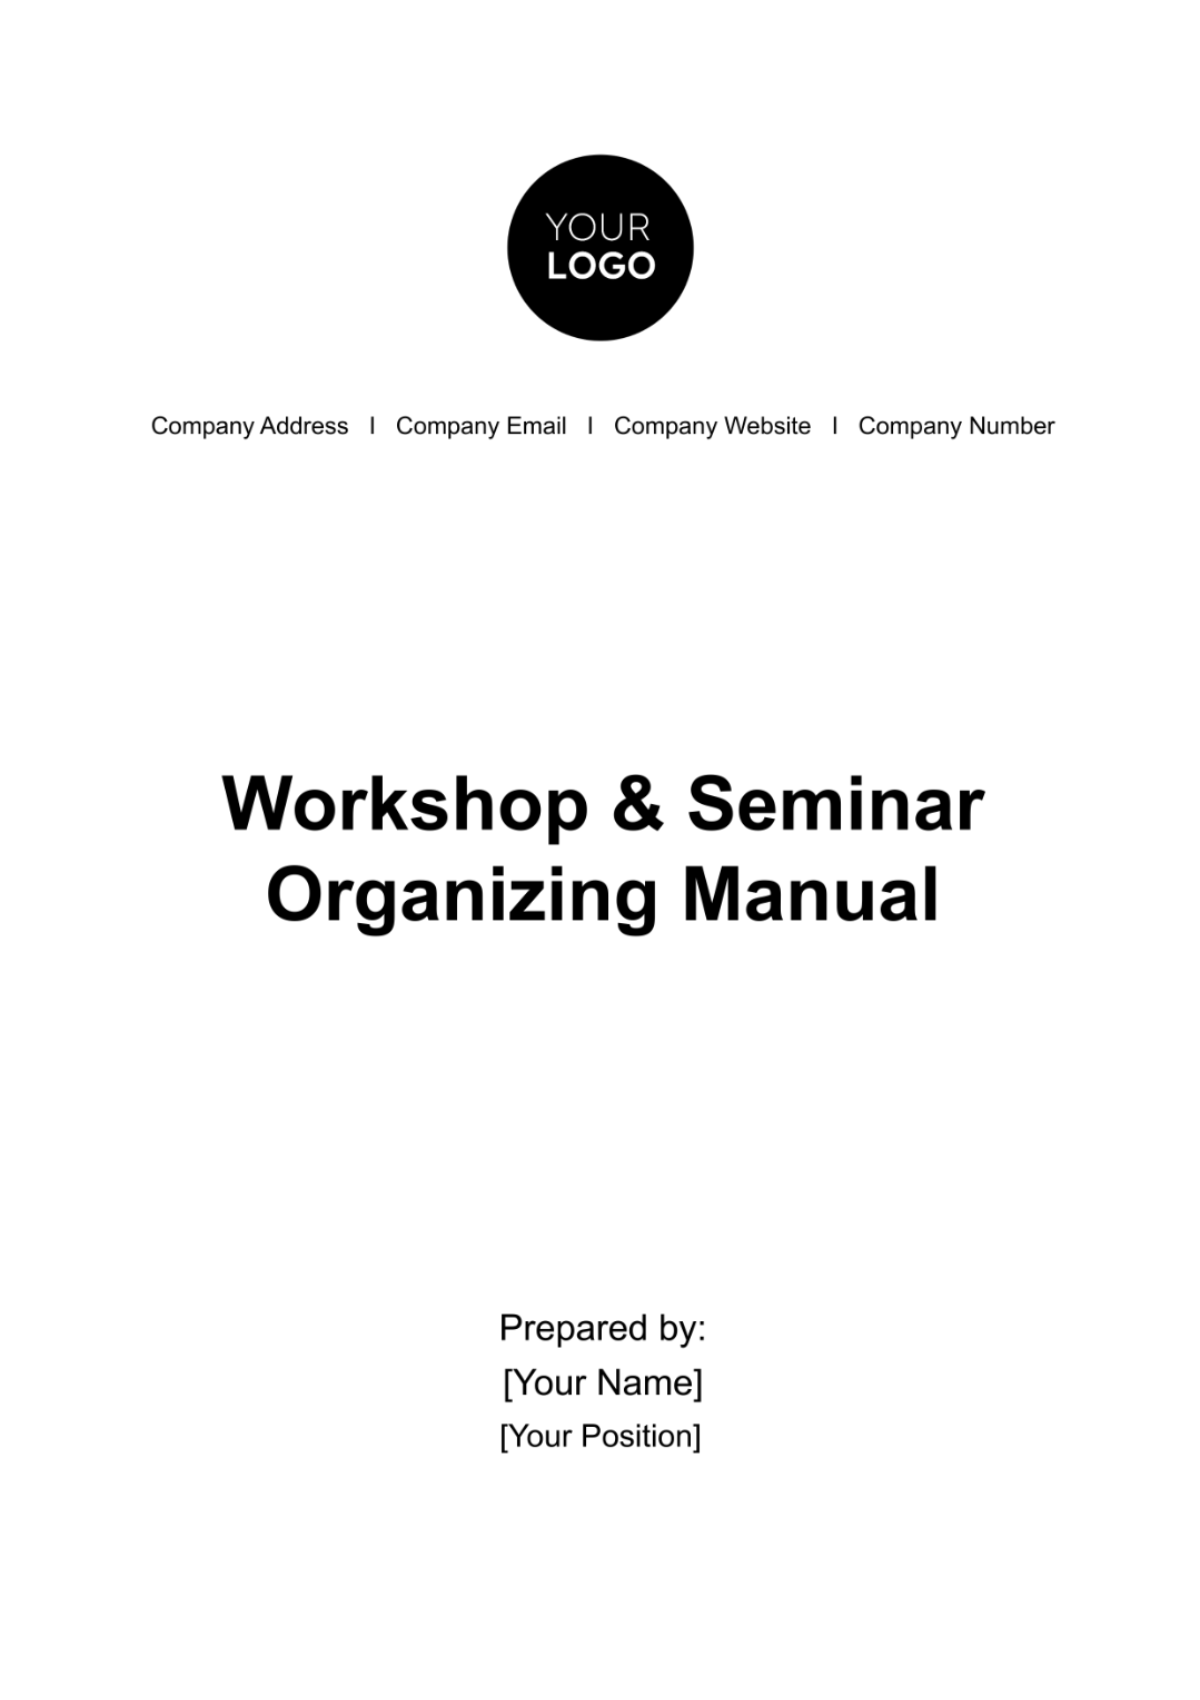 Free Workshop & Seminar Organizing Manual HR Template